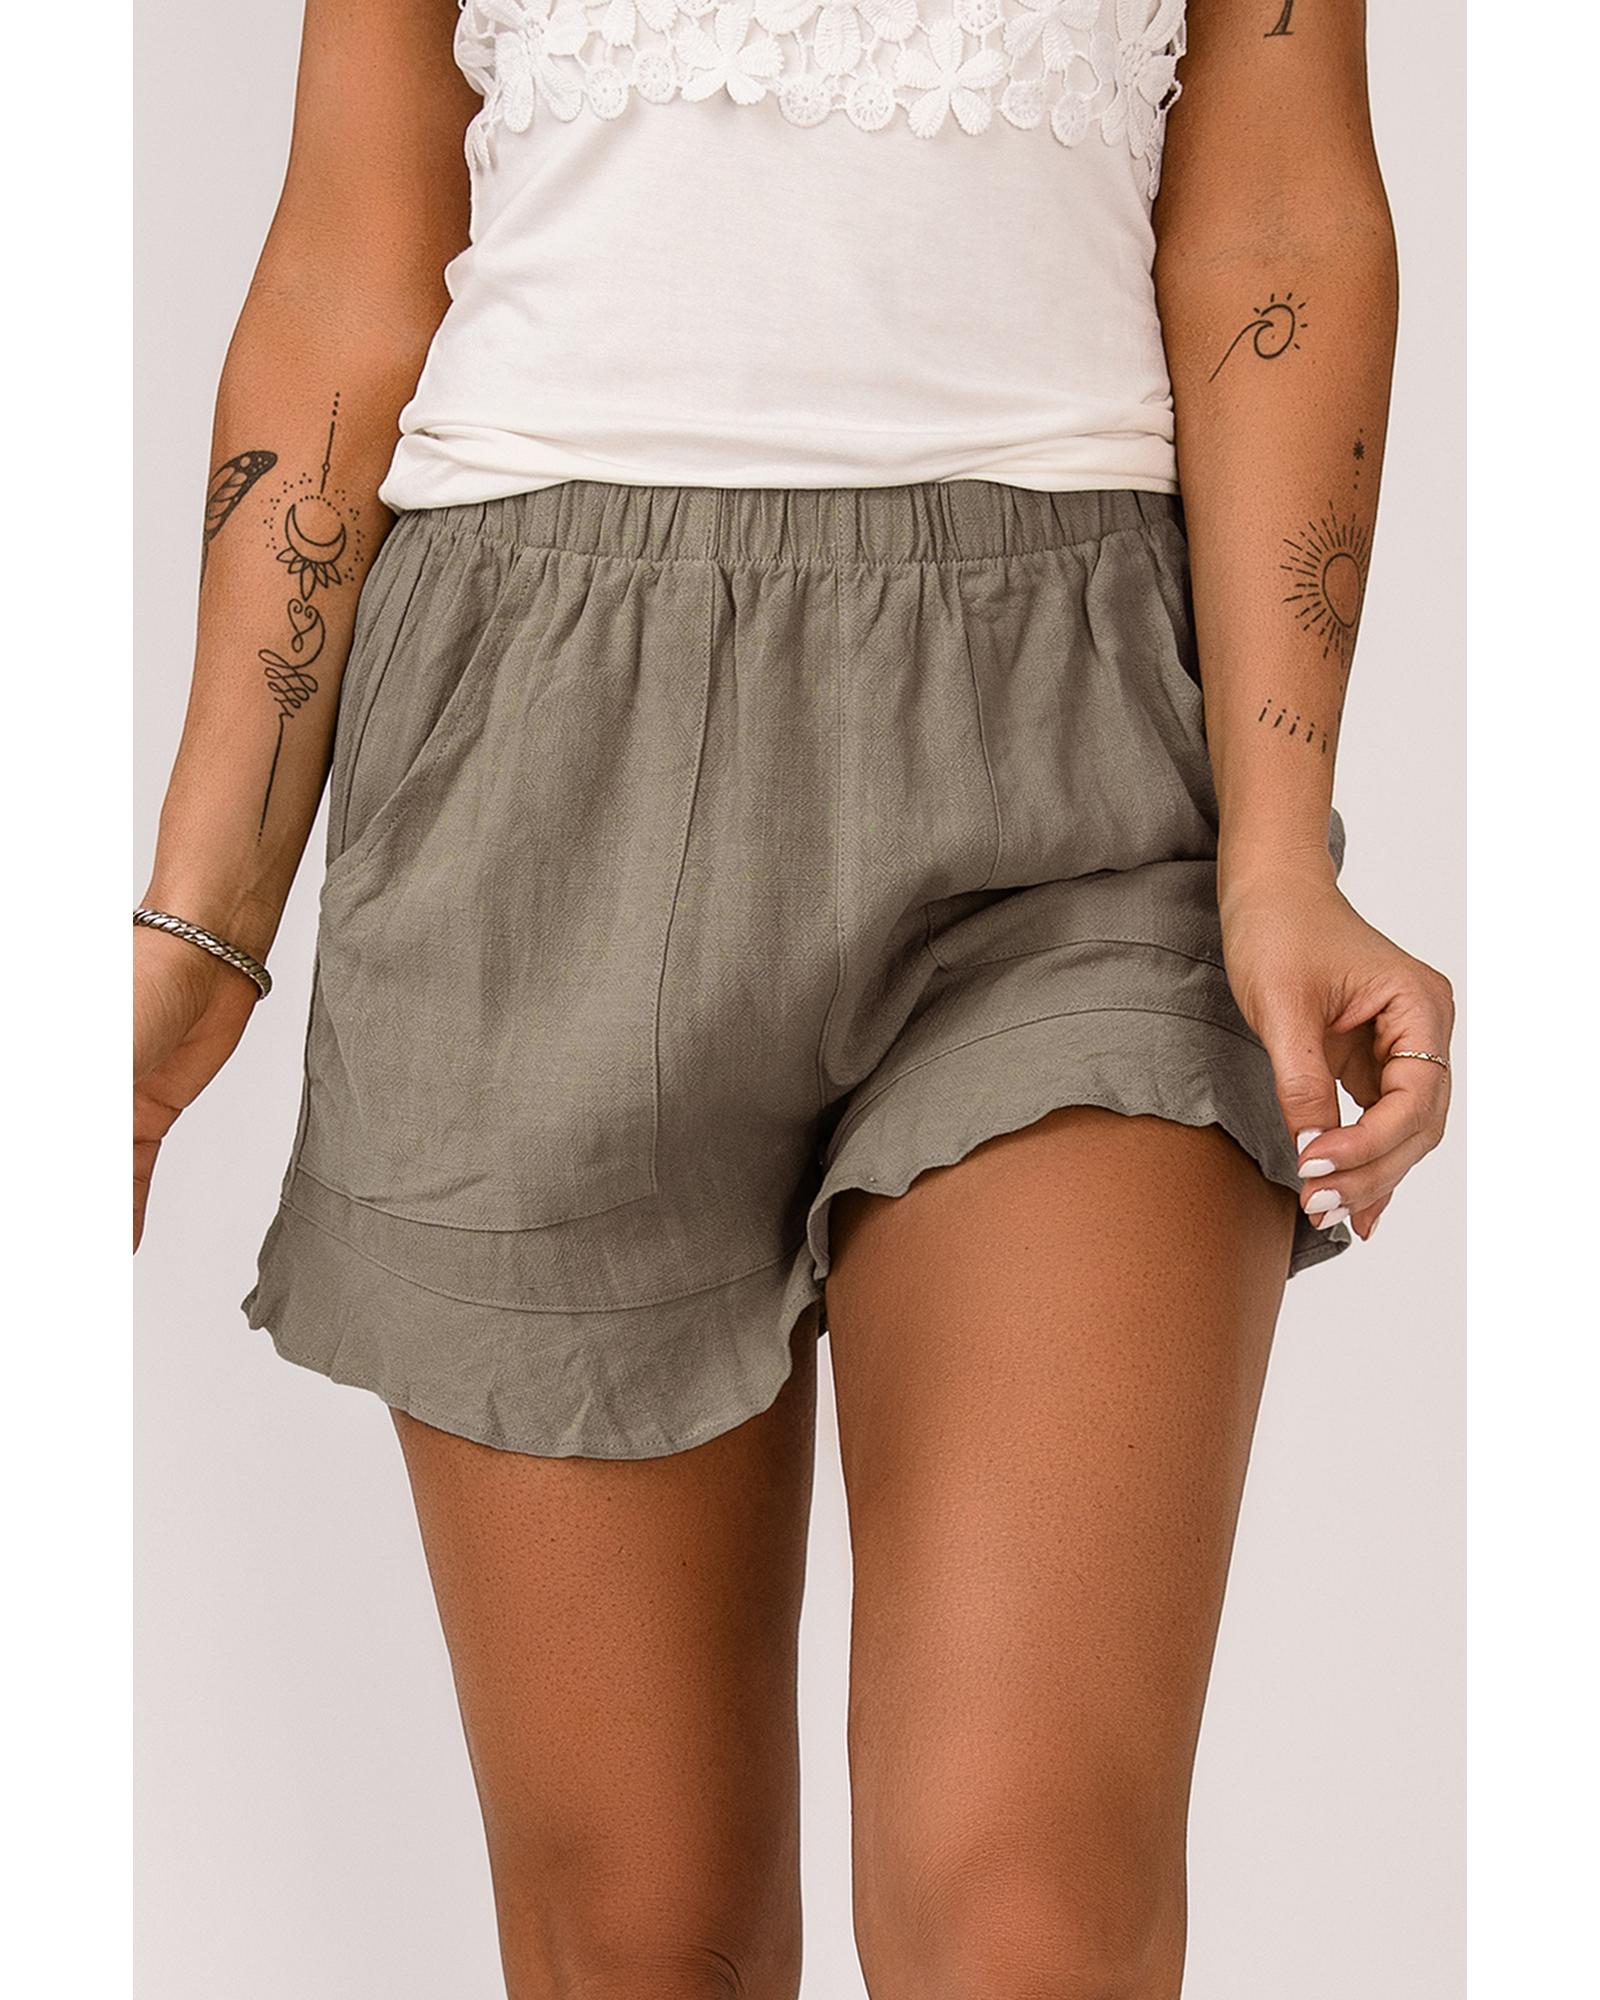 High Waist Pocketed Ruffle Shorts - XL